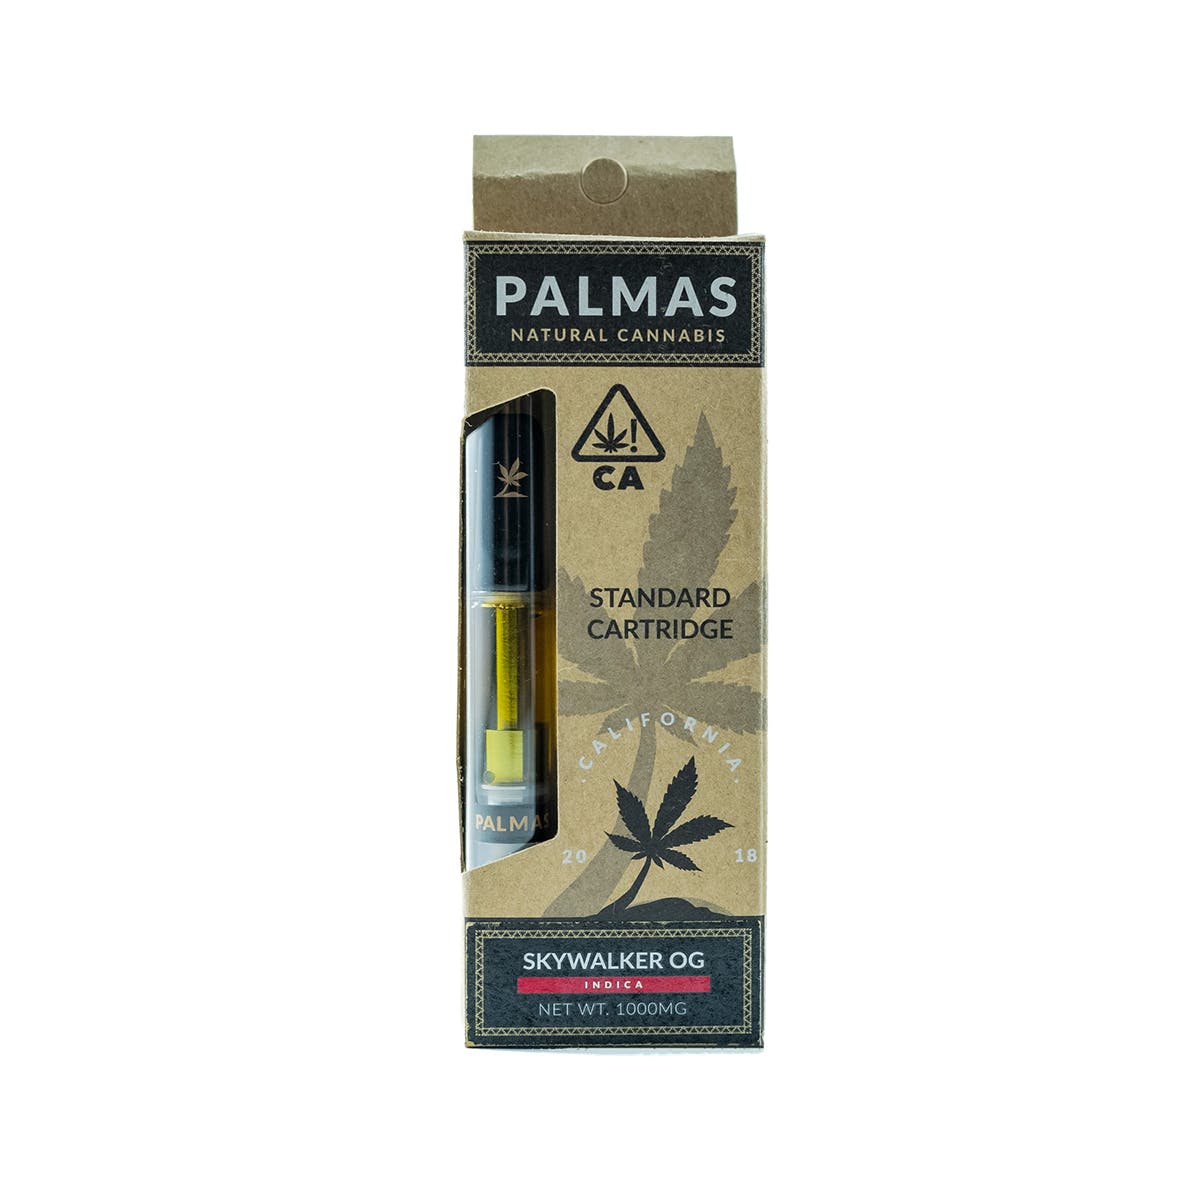 marijuana-dispensaries-straight-up-20-in-compton-palmas-standard-cartridge-skywalker-og